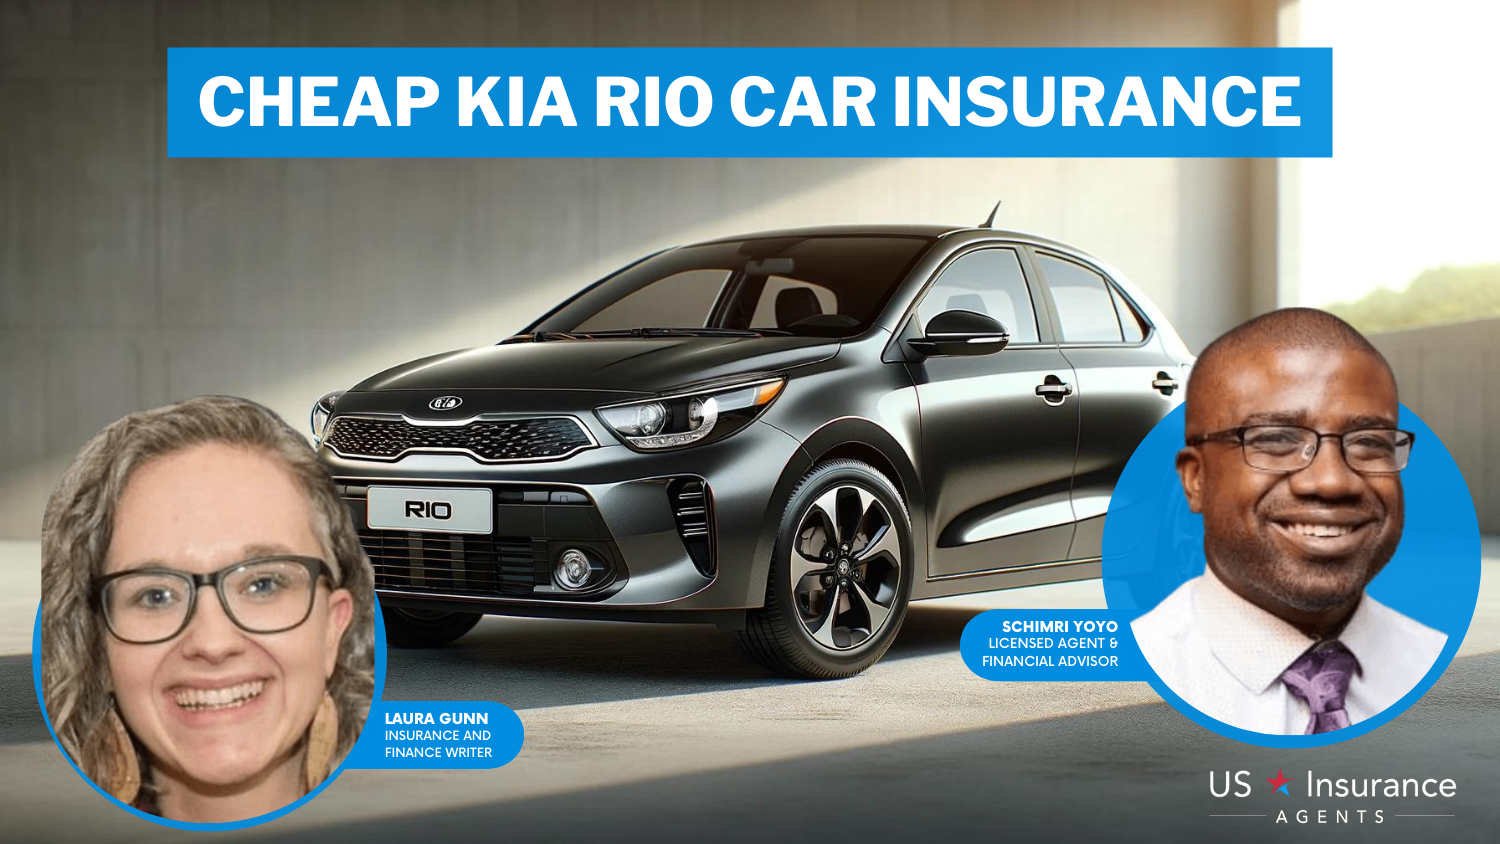 Progressive, USAA, State Farm: Cheap Kia Rio Car Insurance